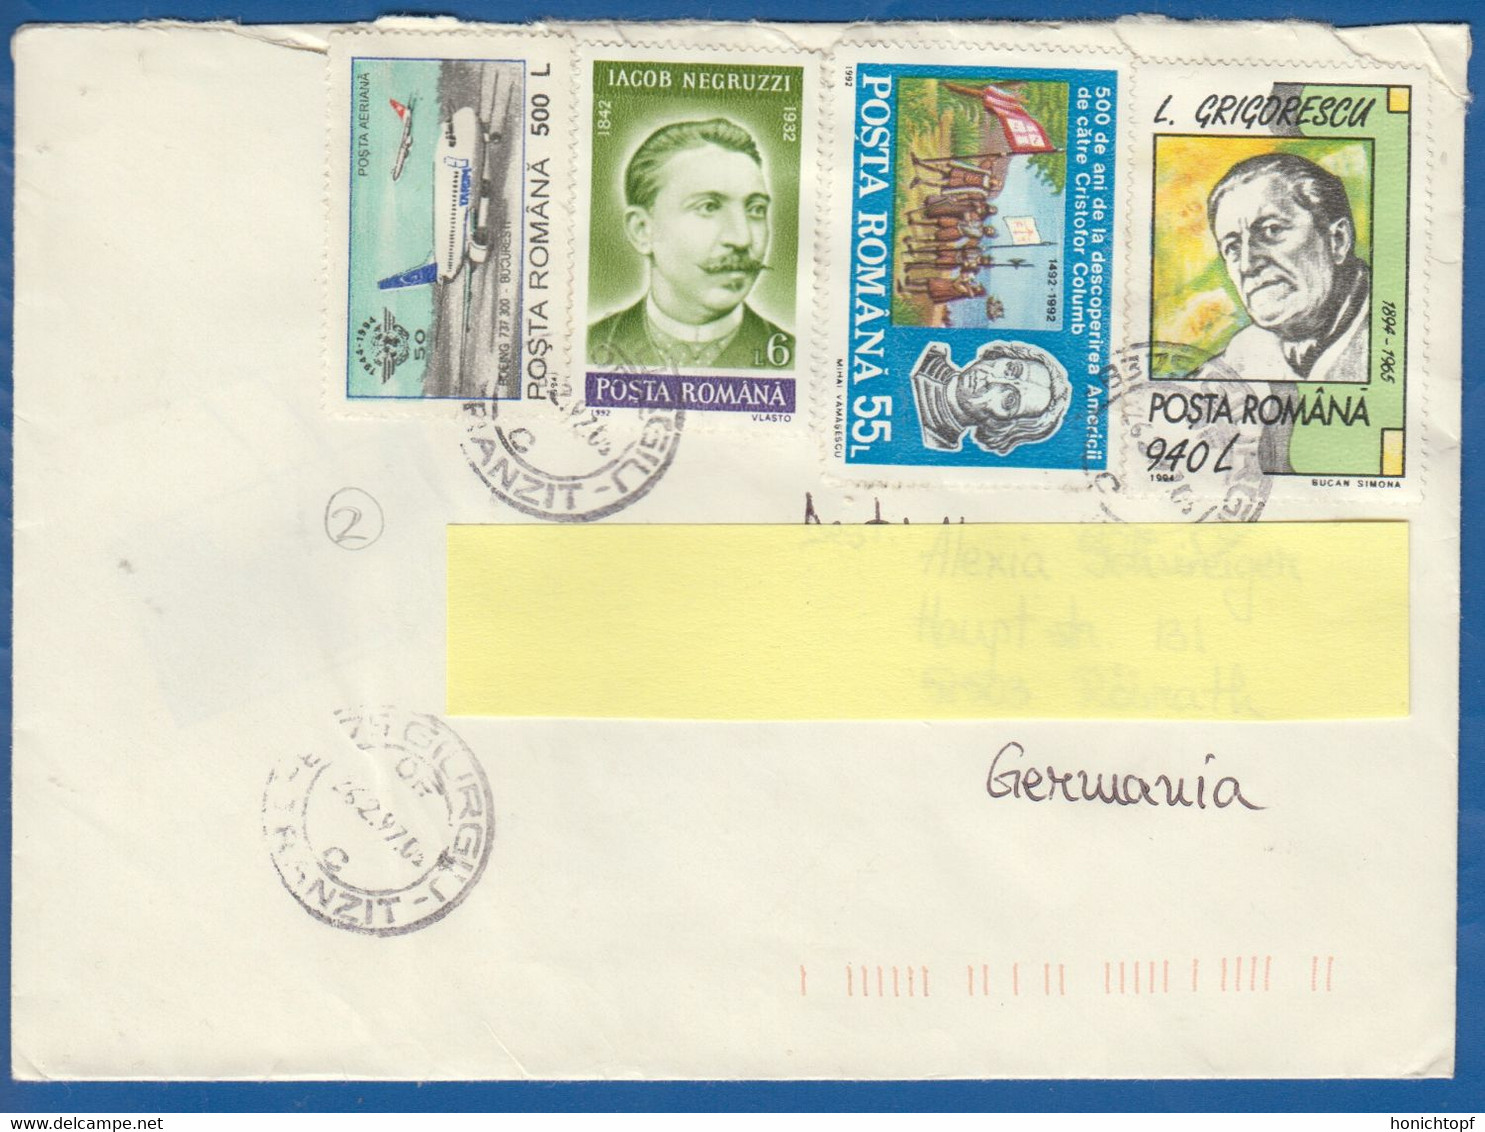 Rumänien; Brief Infla; 1997; Giurgiu; Romania - Covers & Documents